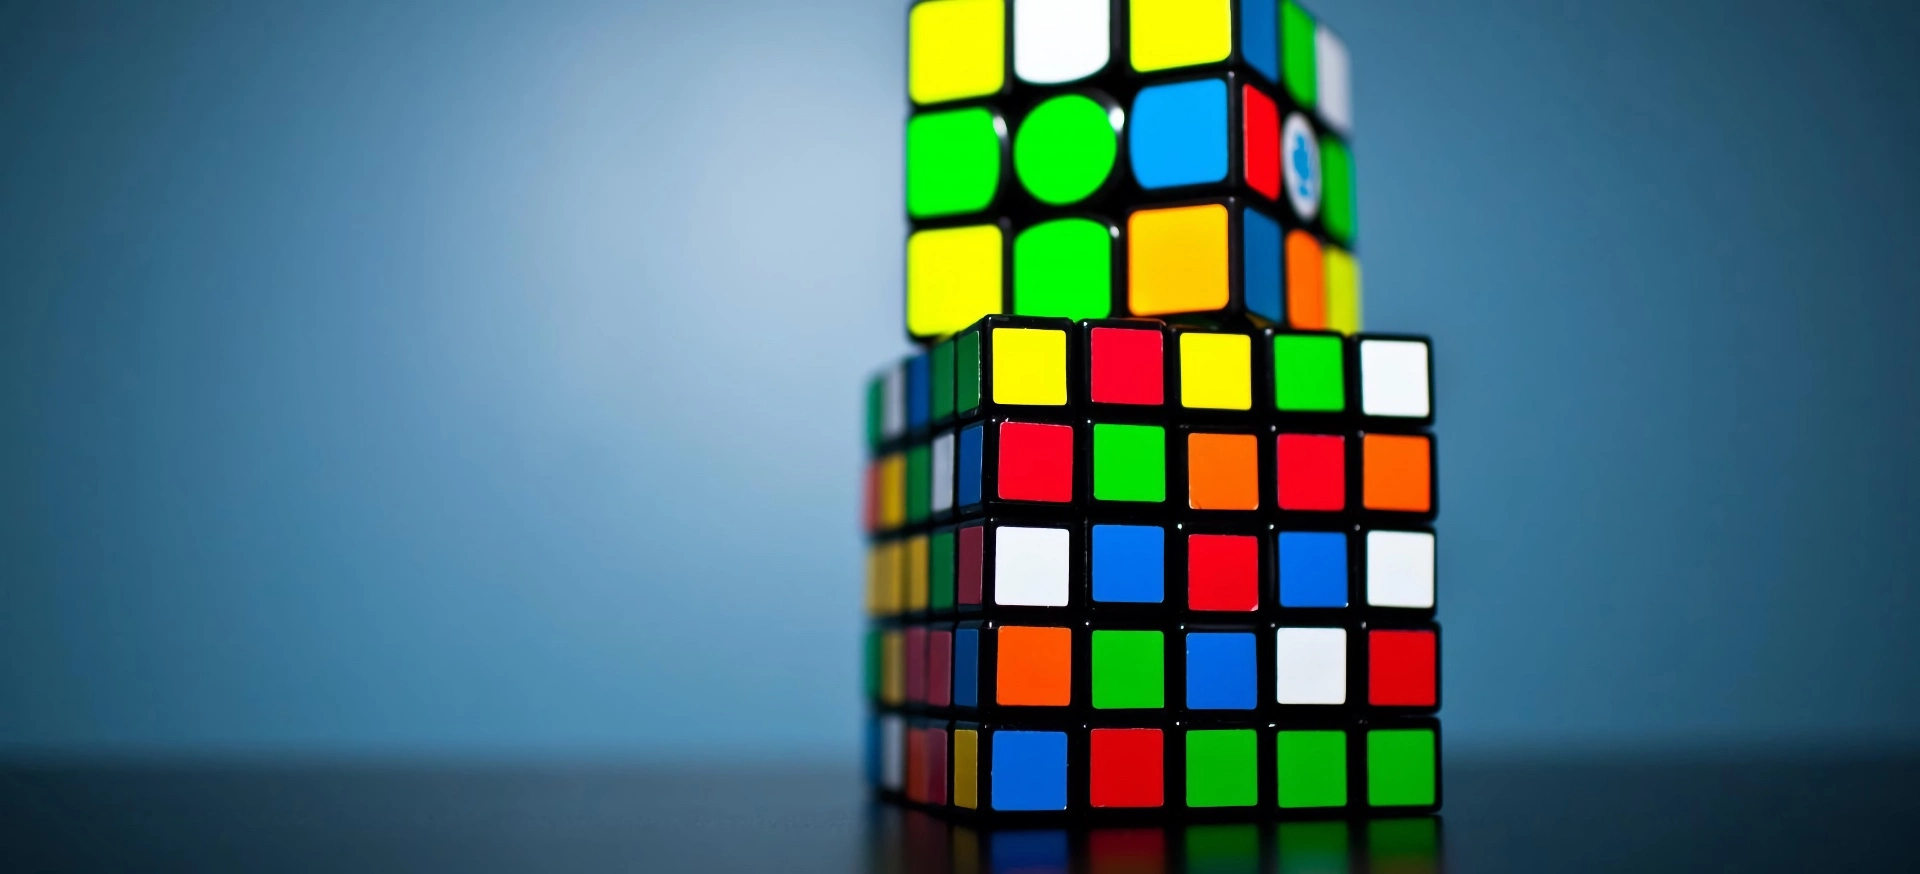 Rubik's Cube: Photo by Olav Ahrens Røtne on Unsplash